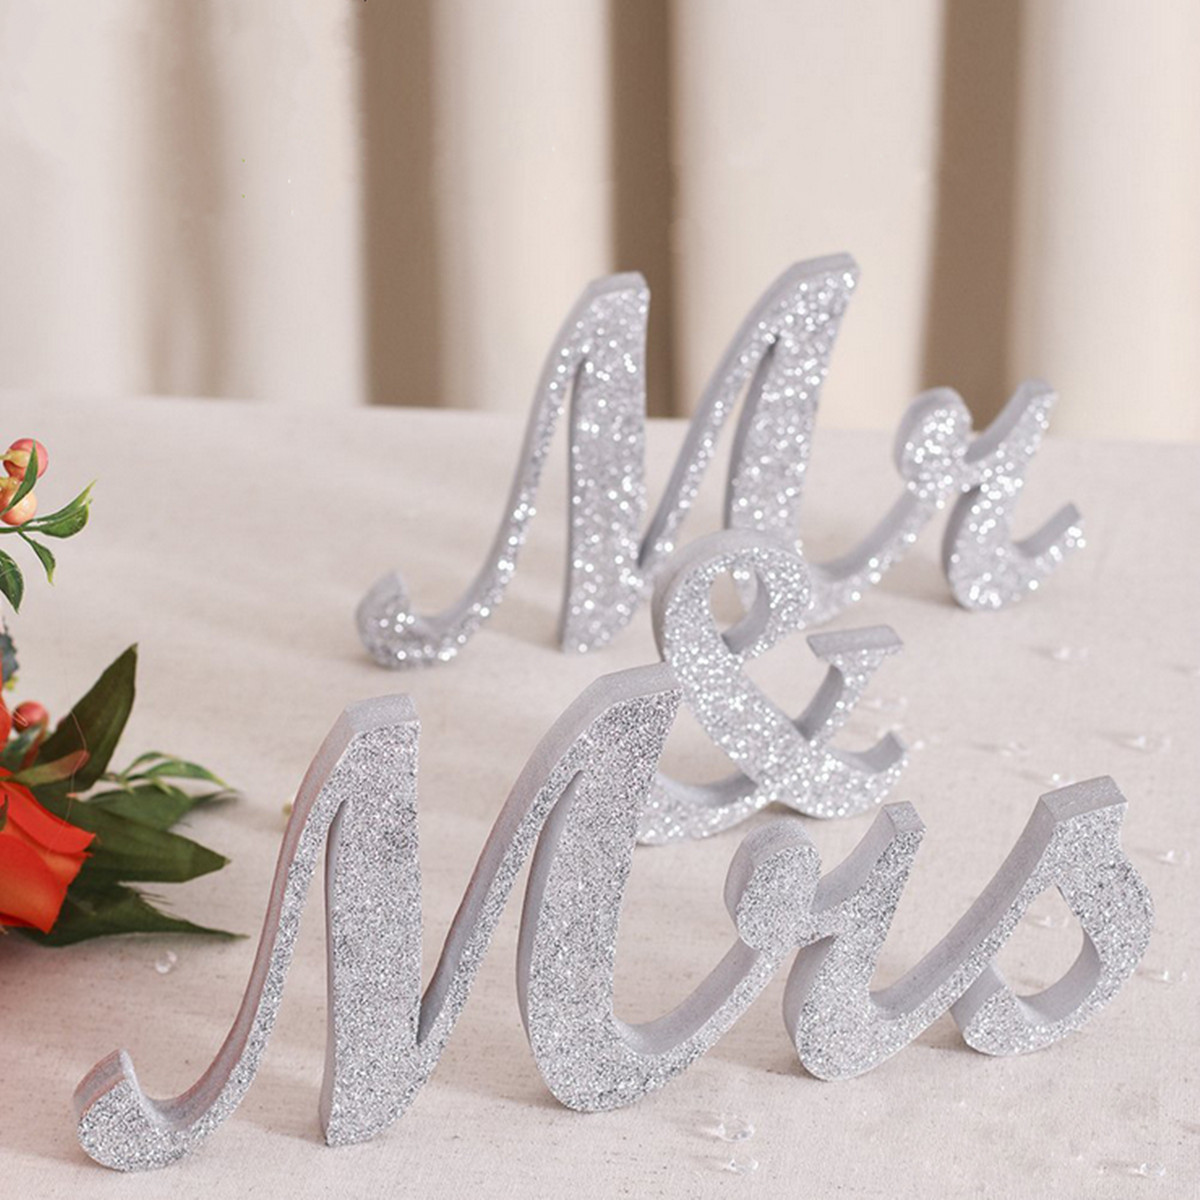 

28CM MR & MRS Silver Shining Bling Деревянные буквы Sign Table Украшение Свадебное Favor Gift Accessories